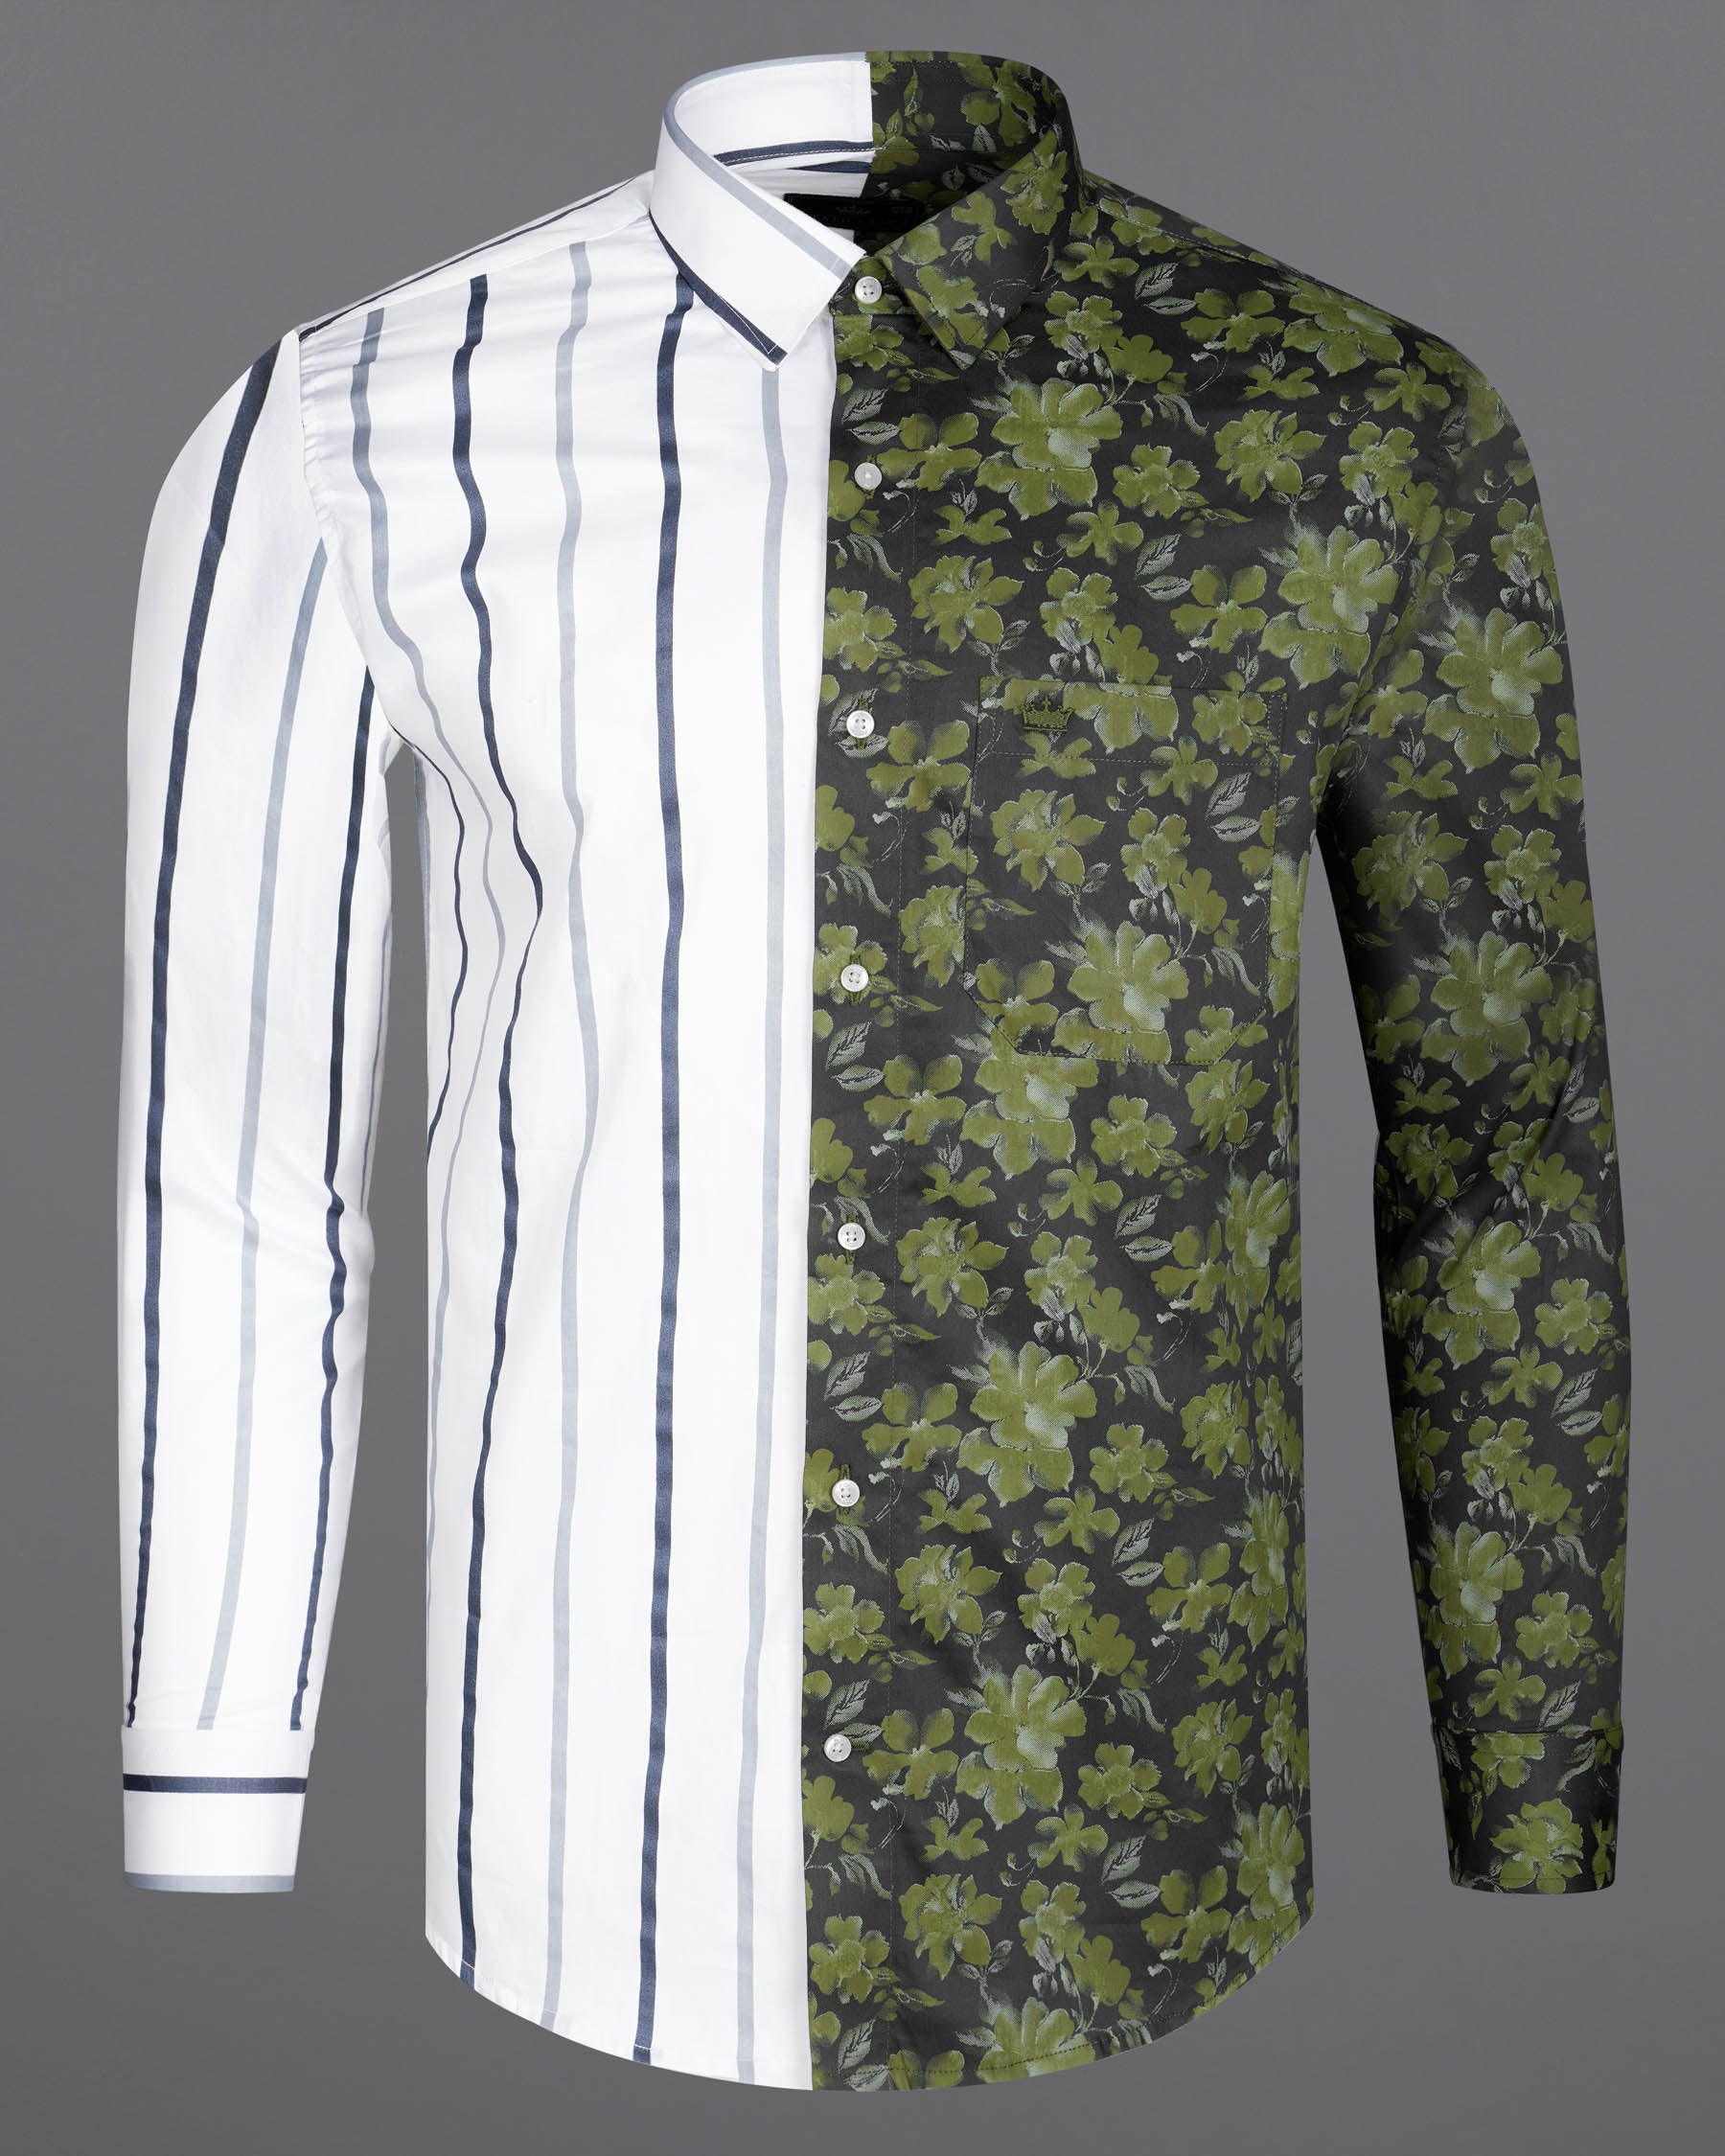 Half White-Striped With Half Clay Creek Green-Floral Printed Premium Cotton Designer Shirt 7949-P67-38, 7949-P67-H-38, 7949-P67-39, 7949-P67-H-39, 7949-P67-40, 7949-P67-H-40, 7949-P67-42, 7949-P67-H-42, 7949-P67-44, 7949-P67-H-44, 7949-P67-46, 7949-P67-H-46, 7949-P67-48, 7949-P67-H-48, 7949-P67-50, 7949-P67-H-50, 7949-P67-52, 7949-P67-H-52